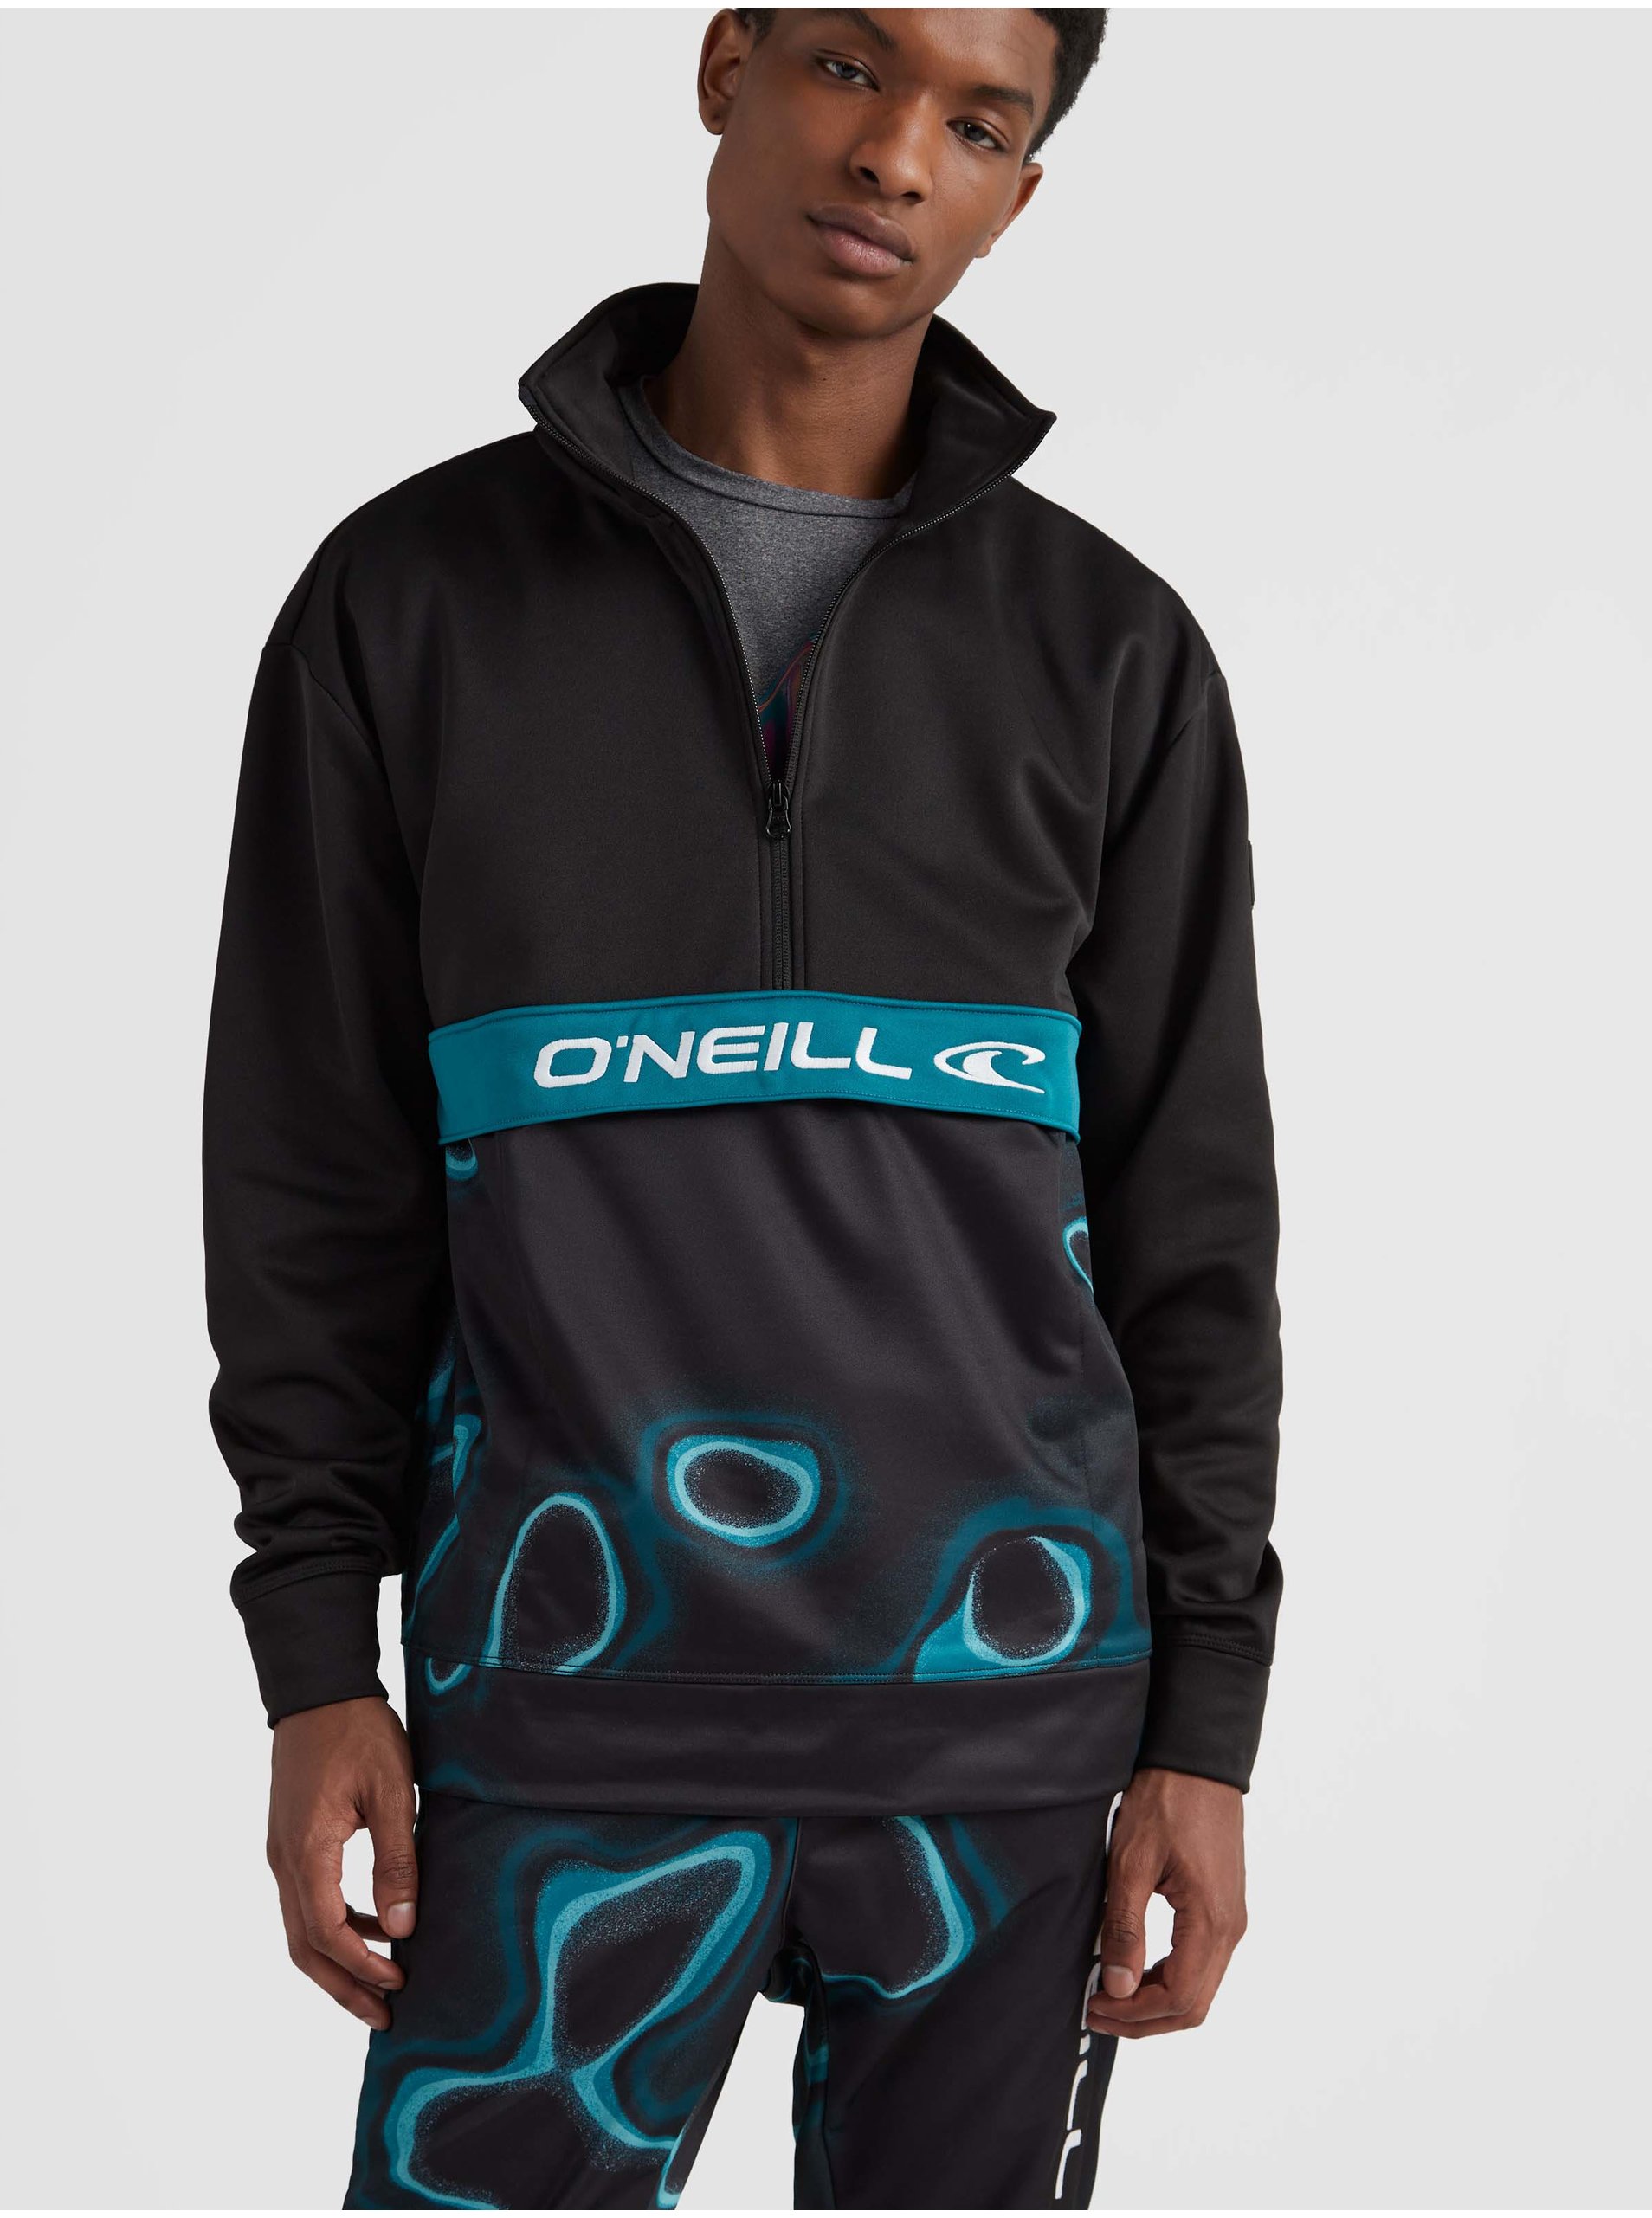 ONeill Mens Patterned Sweatshirt O'Neill Rutile - Men